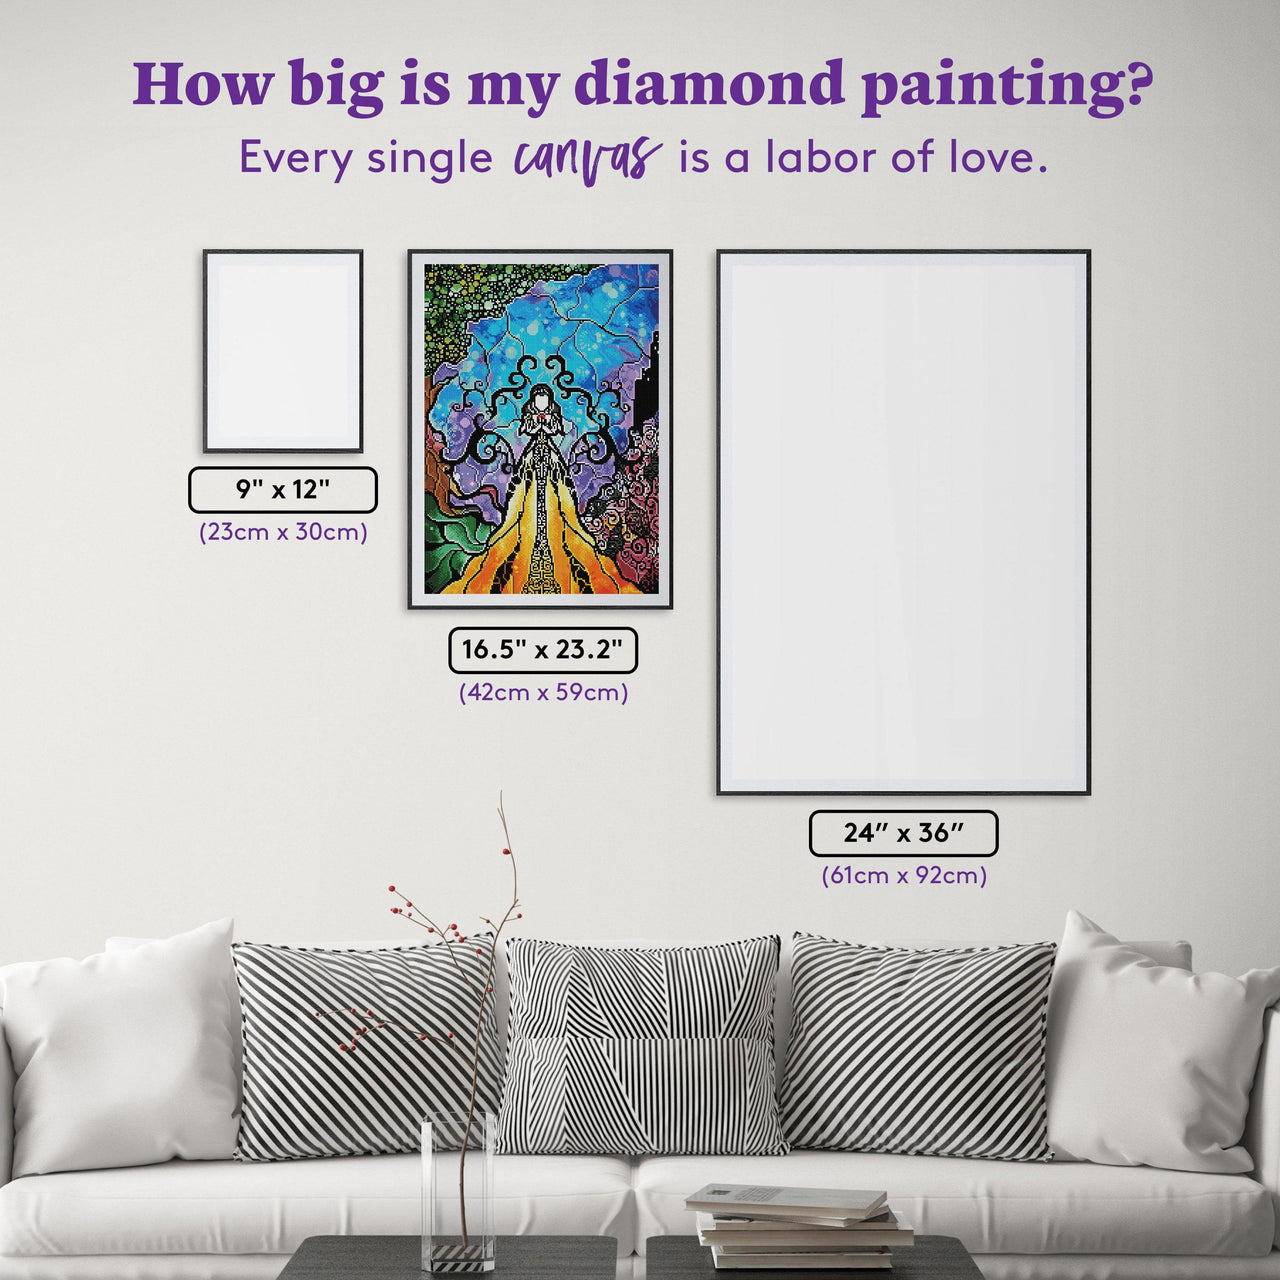 Diamond Painting One Little Bite 16.5" x 23.2" (42cm x 59cm) / Square With 33 Colors / 38,280